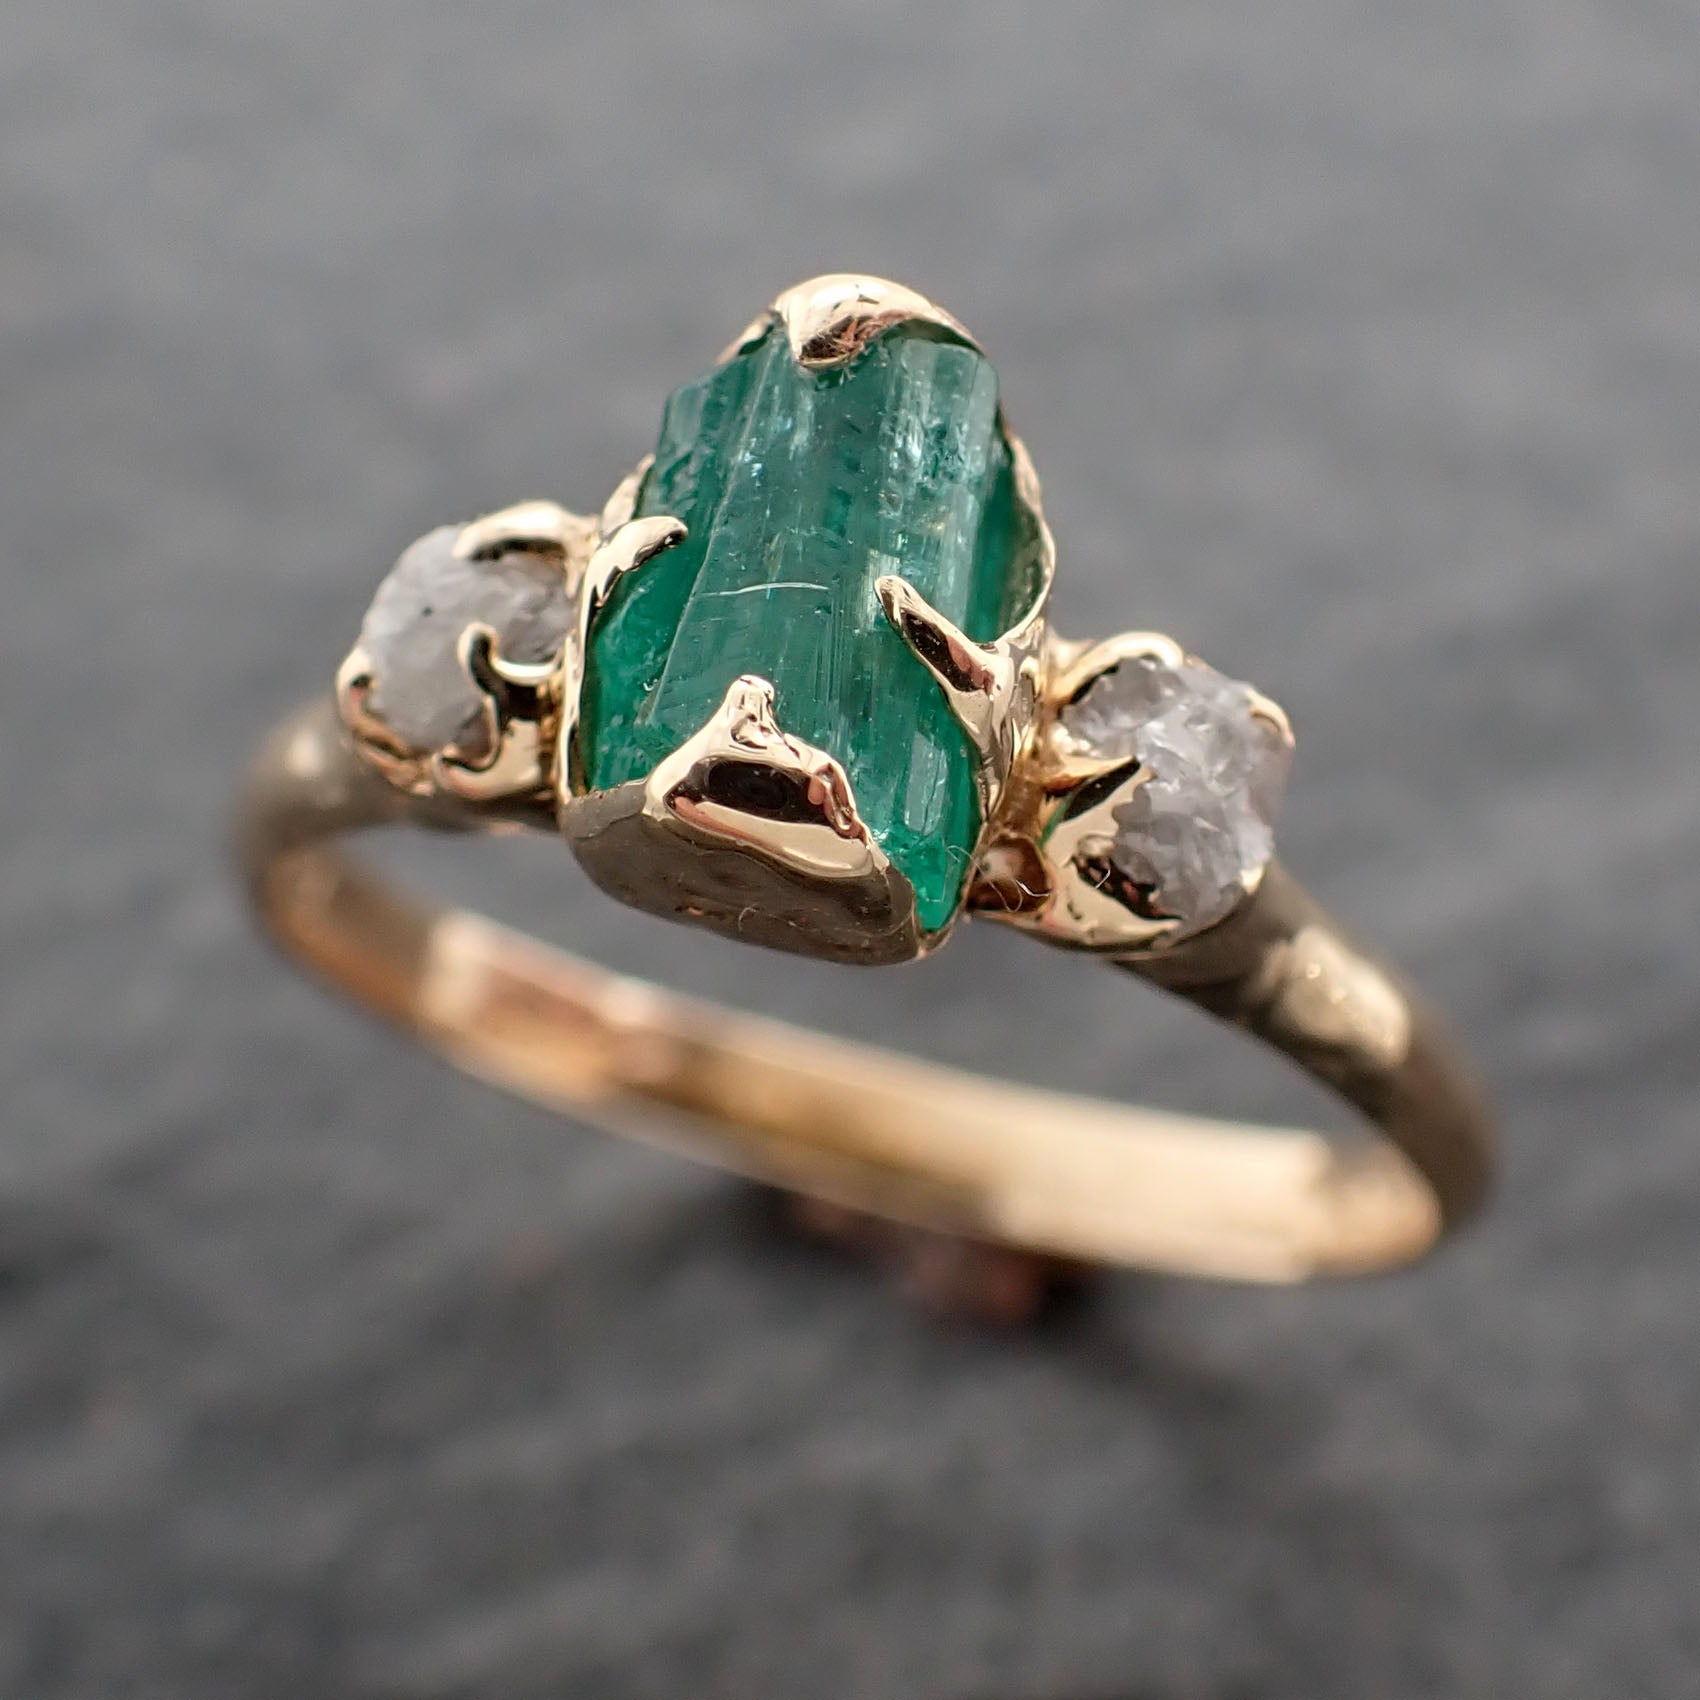 three raw stone diamond and emerald engagement ring 18k gold multi stone wedding ring uncut birthstone stacking ring rough diamond ring 2417 Alternative Engagement